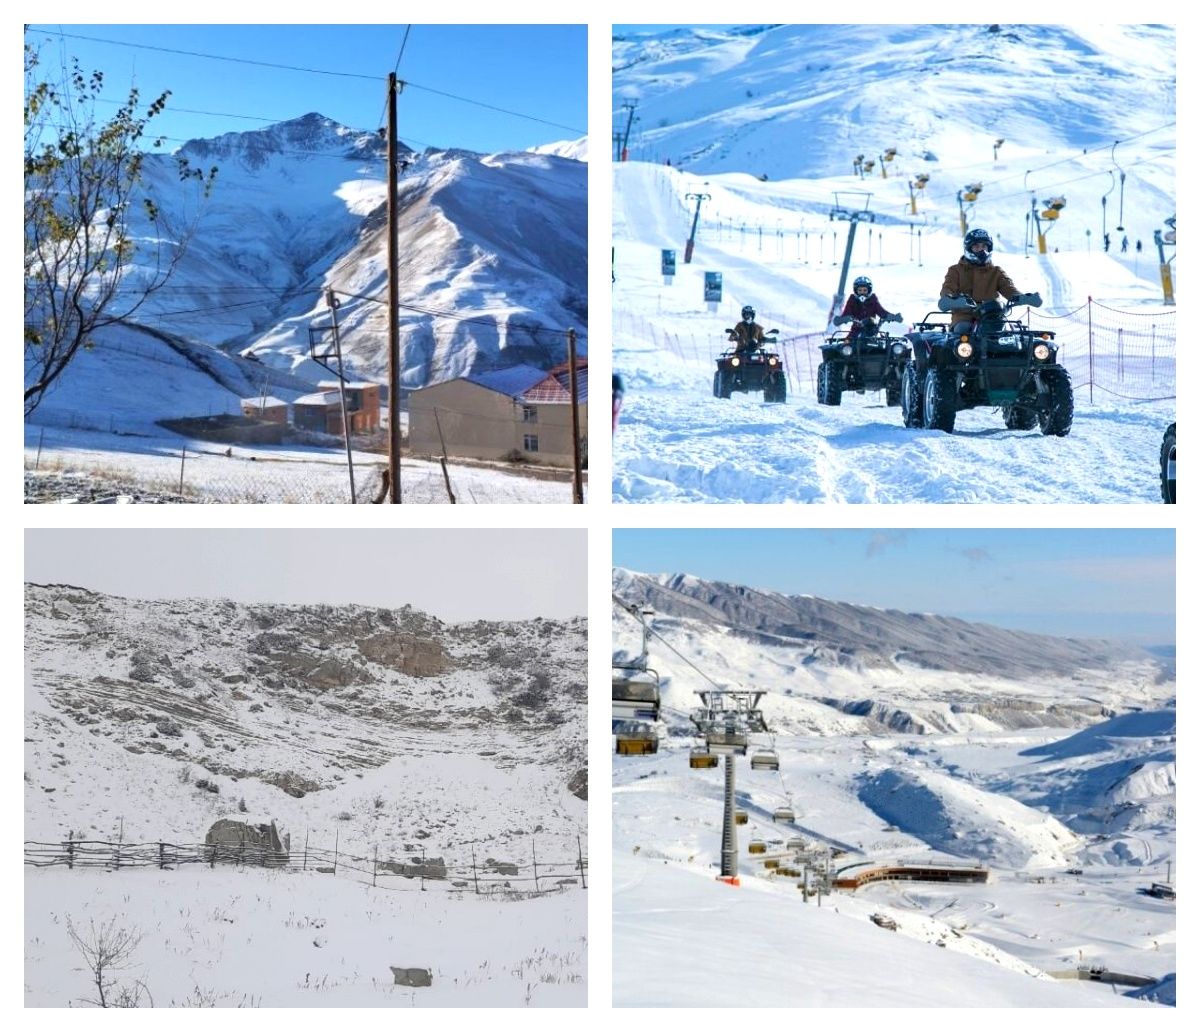 Azerbaijani districts transform into breathtaking winter wonderland [PHOTOS]